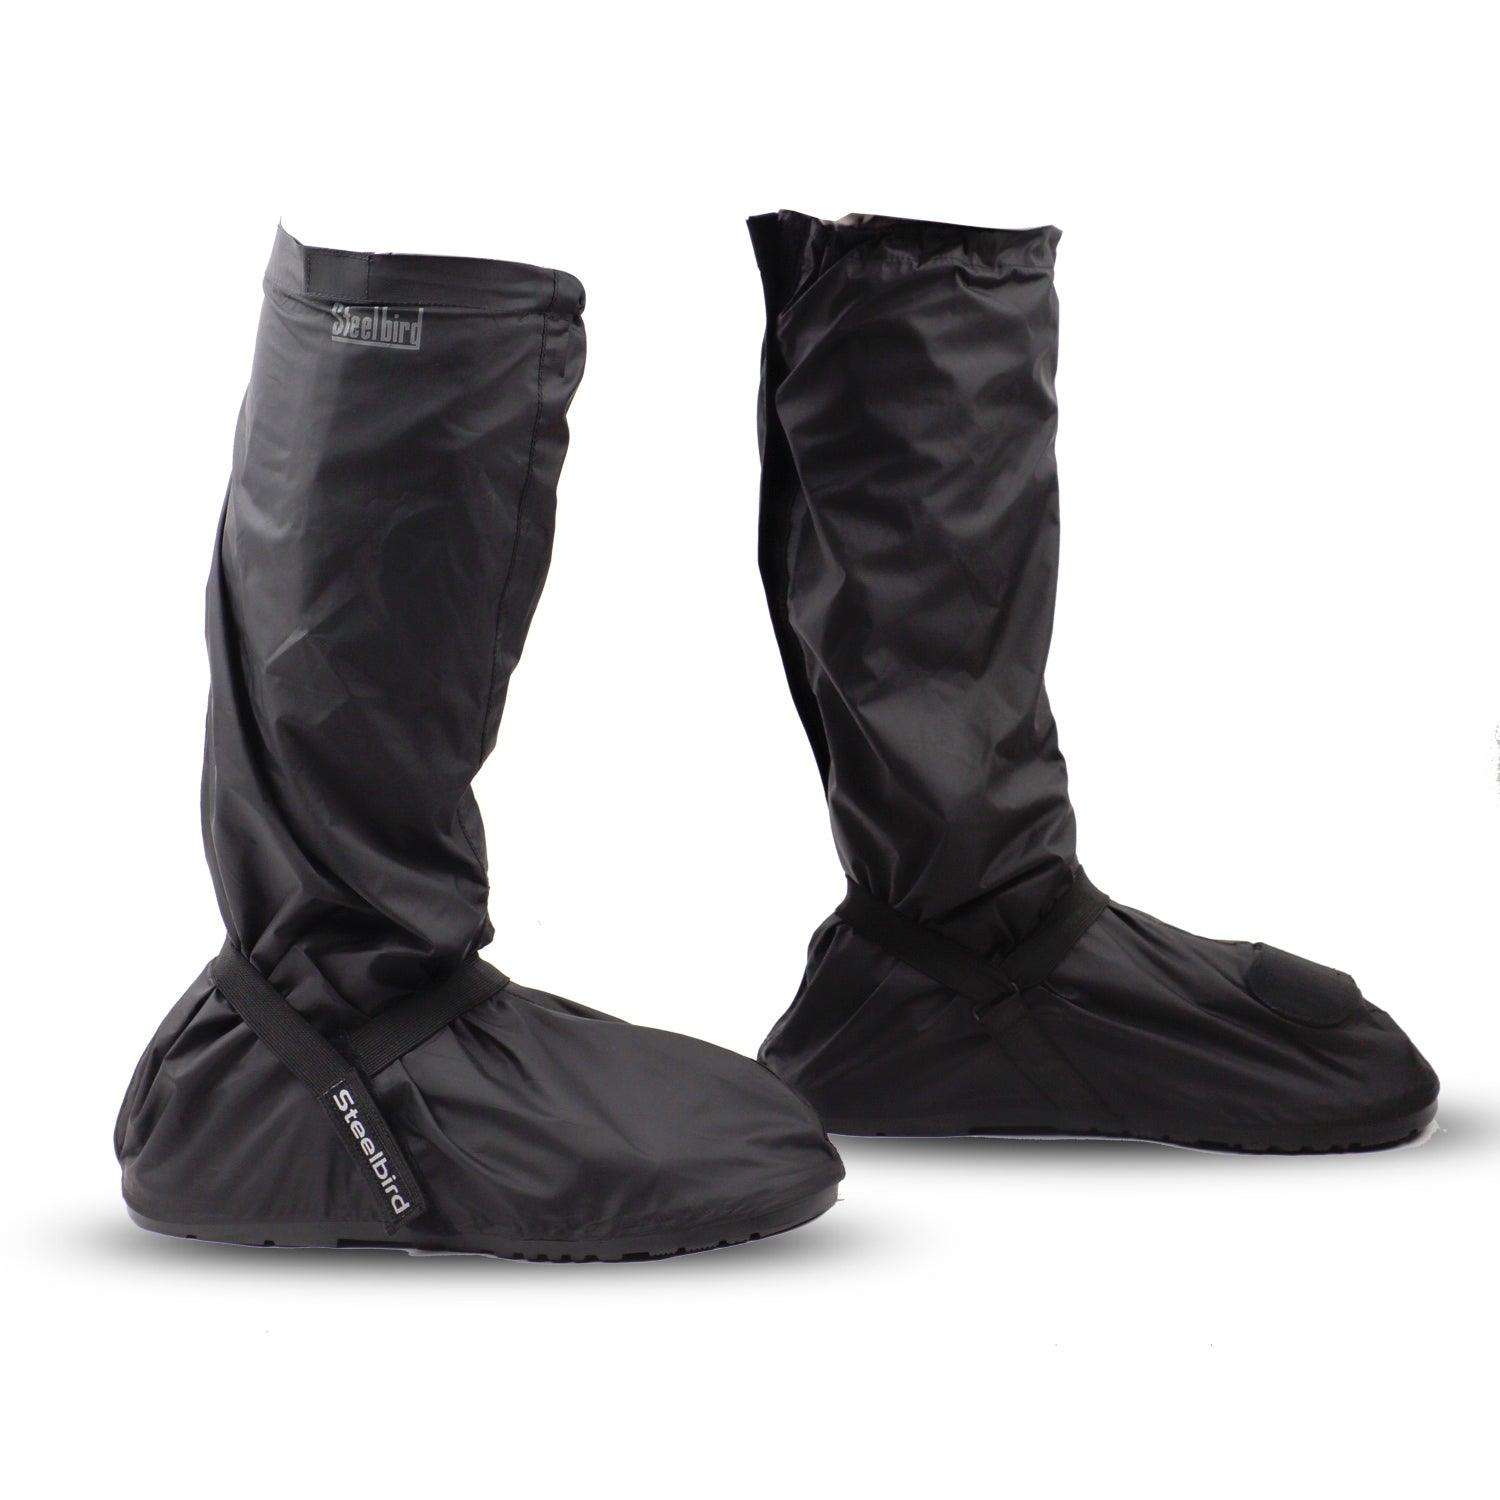 Steelbird Shoe Cover (Black)